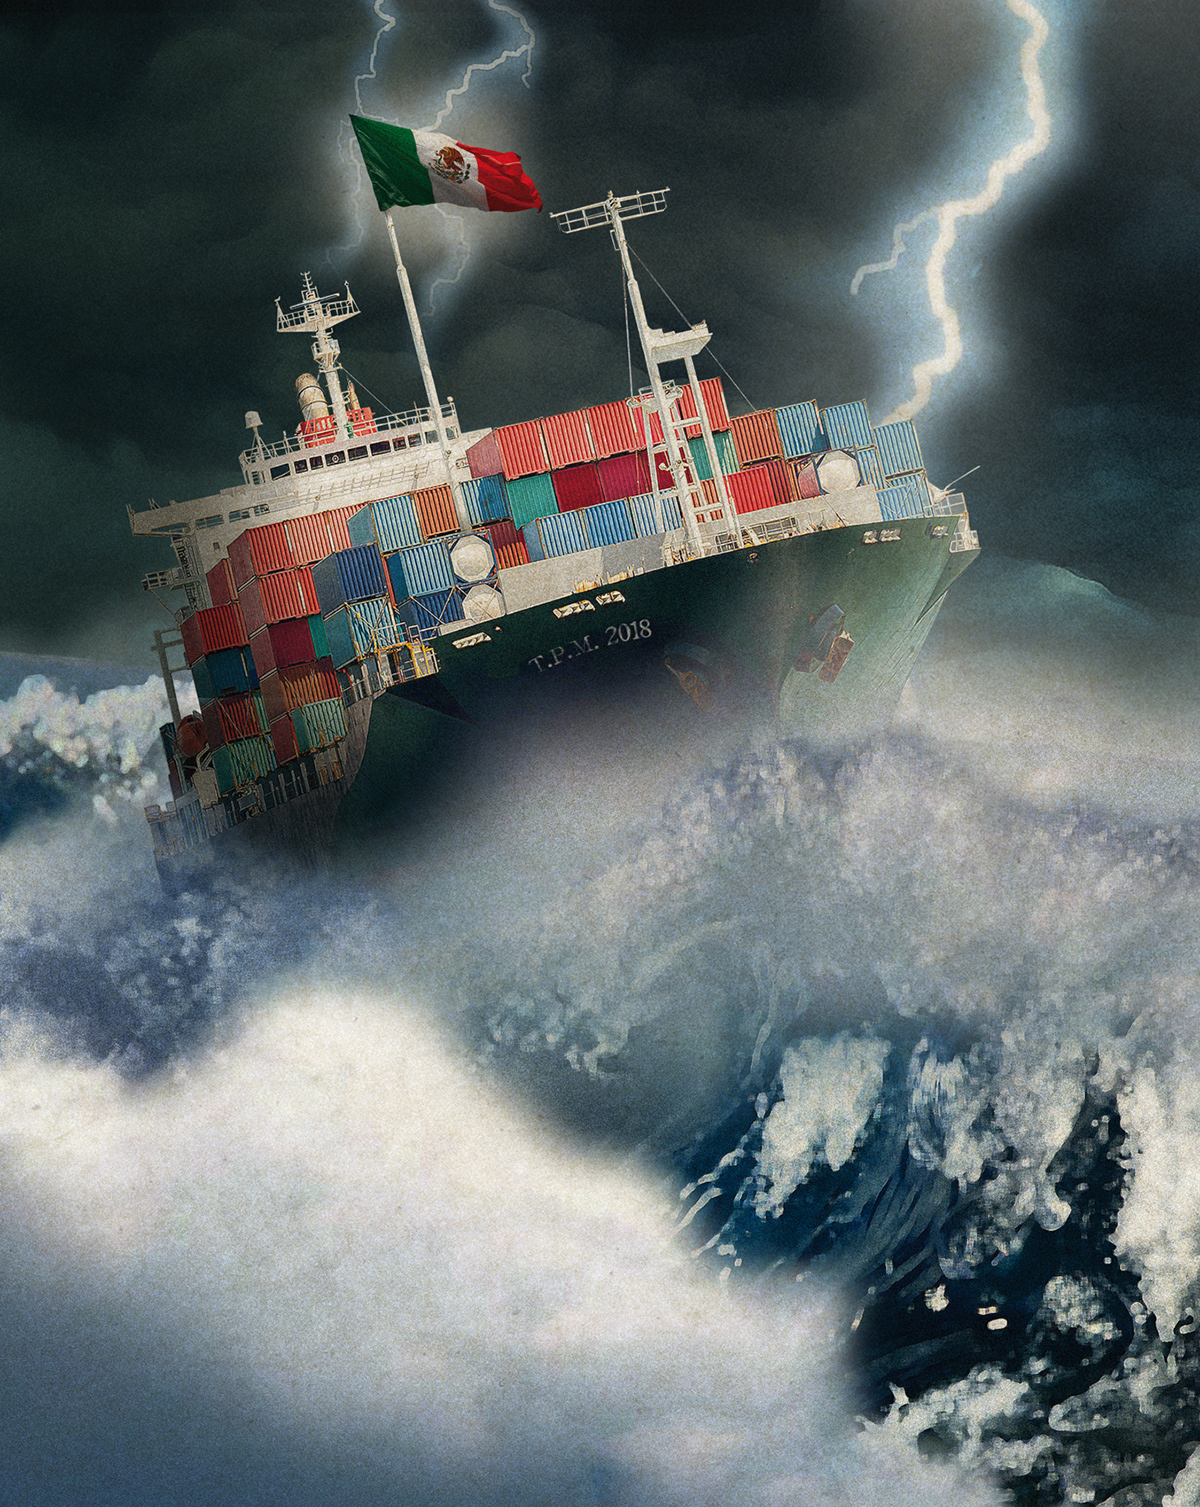 magazine year 2018 agenda vintage Retro storm ship Forbes Forbes Mexico ILLUSTRATION 